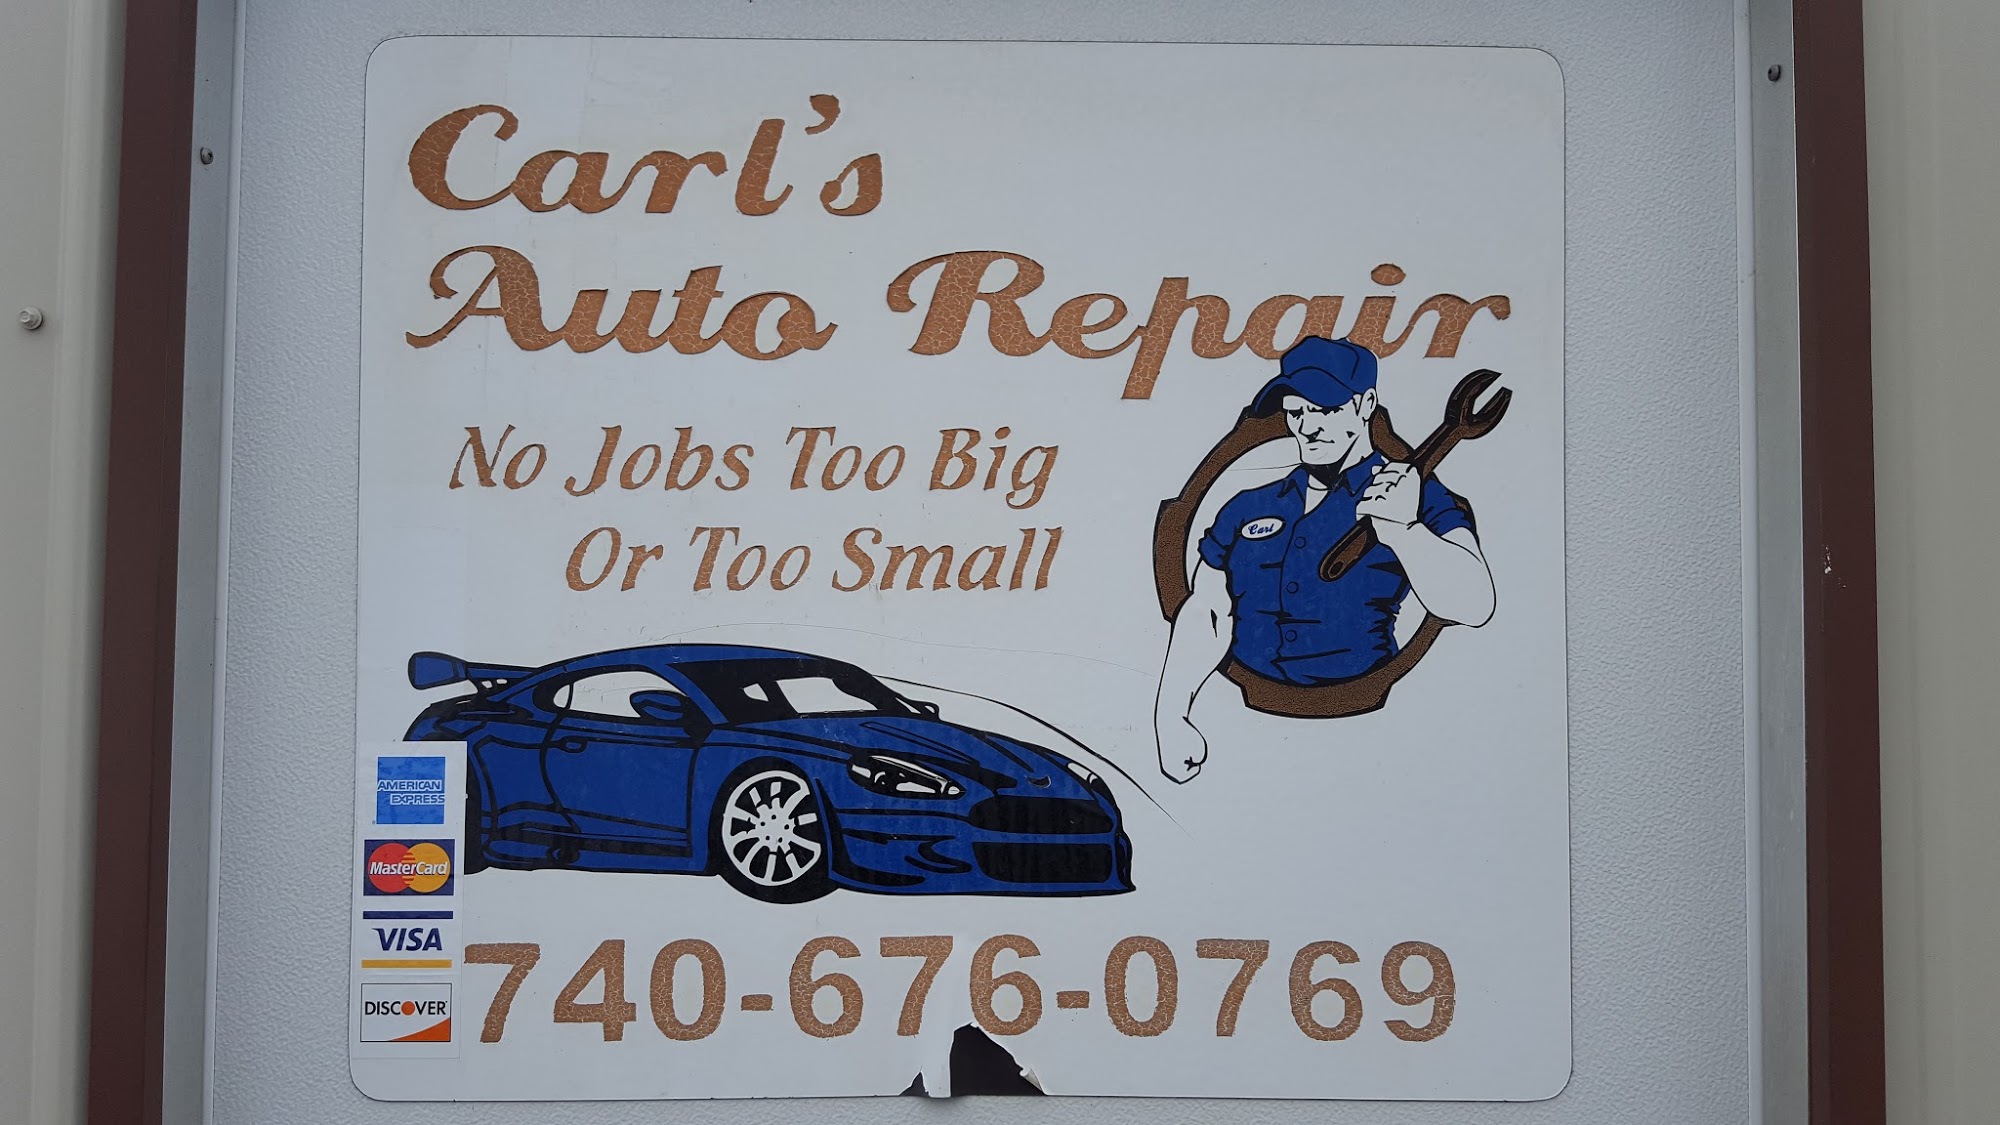 Carl's Auto Repair